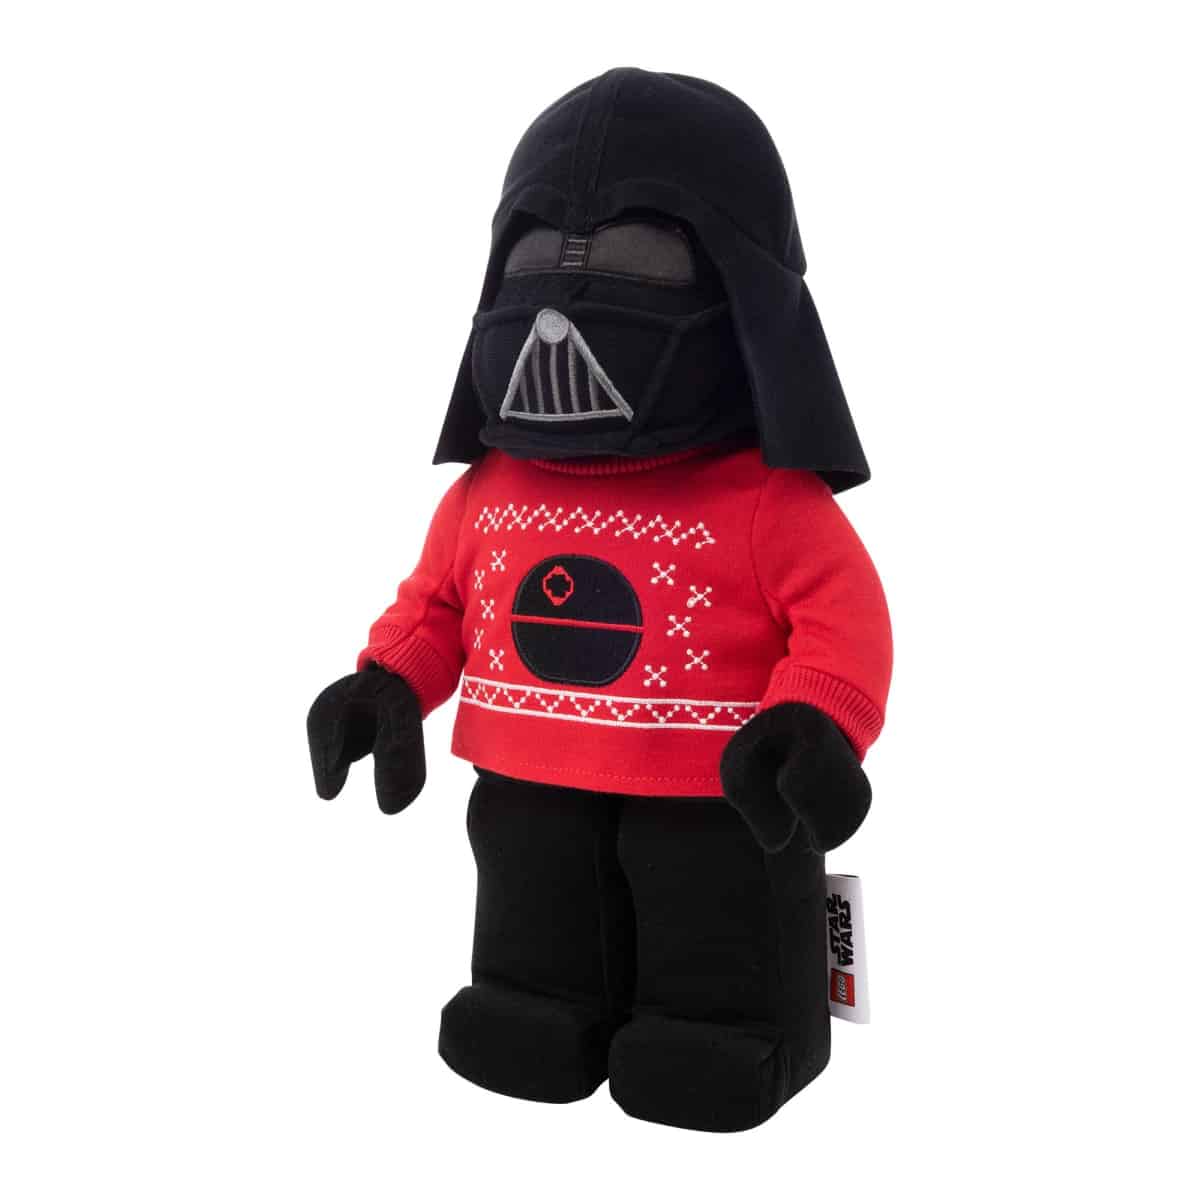 LEGO Darth Vader Holiday Plush 5007462 – $40.99